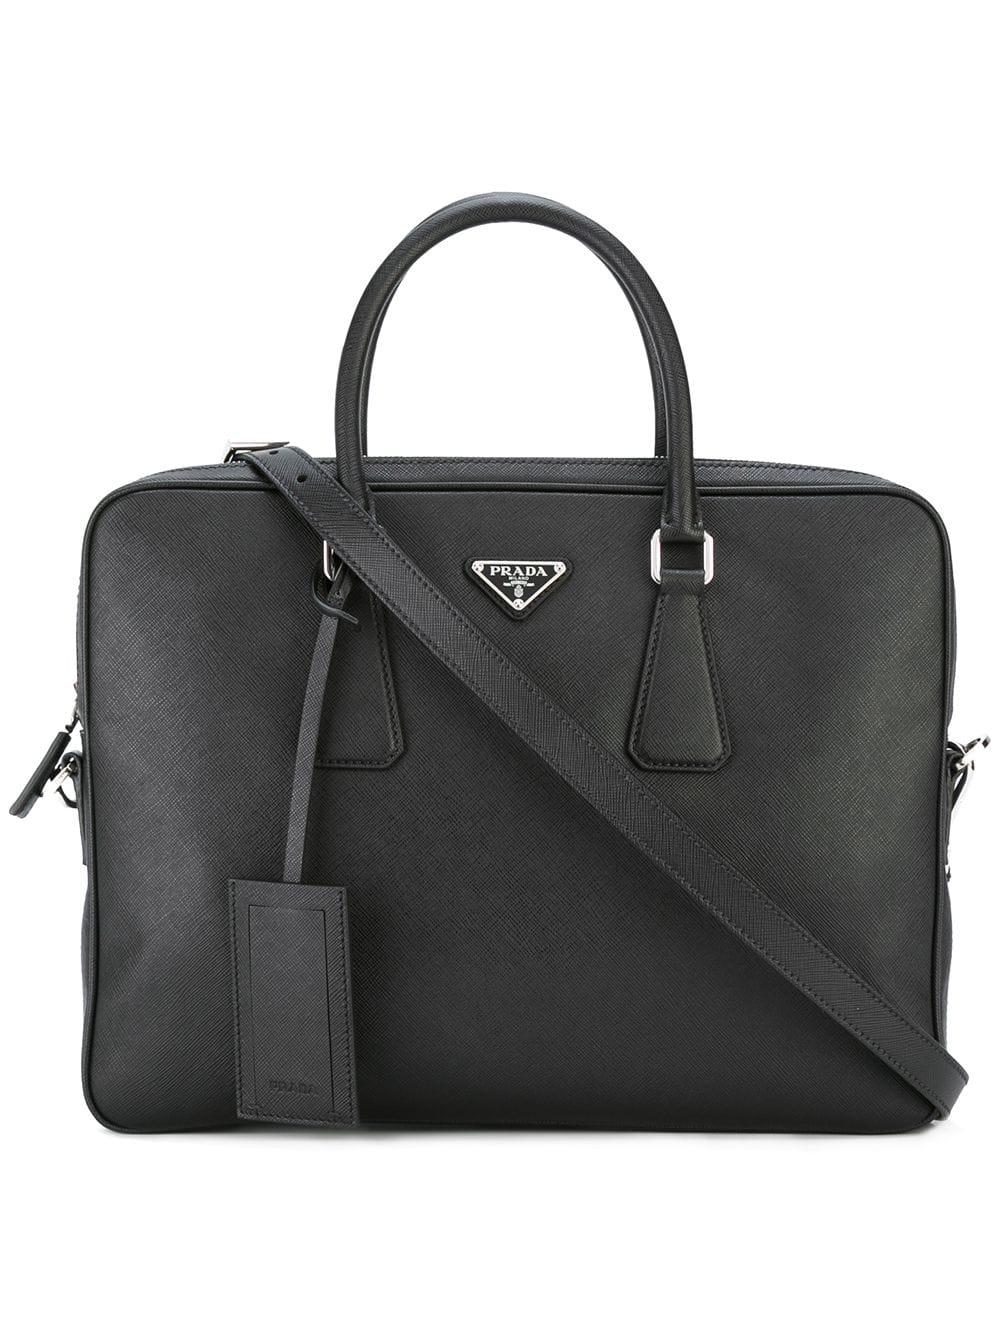 Prada Classic Briefcase in Black for Men - Save 24% - Lyst